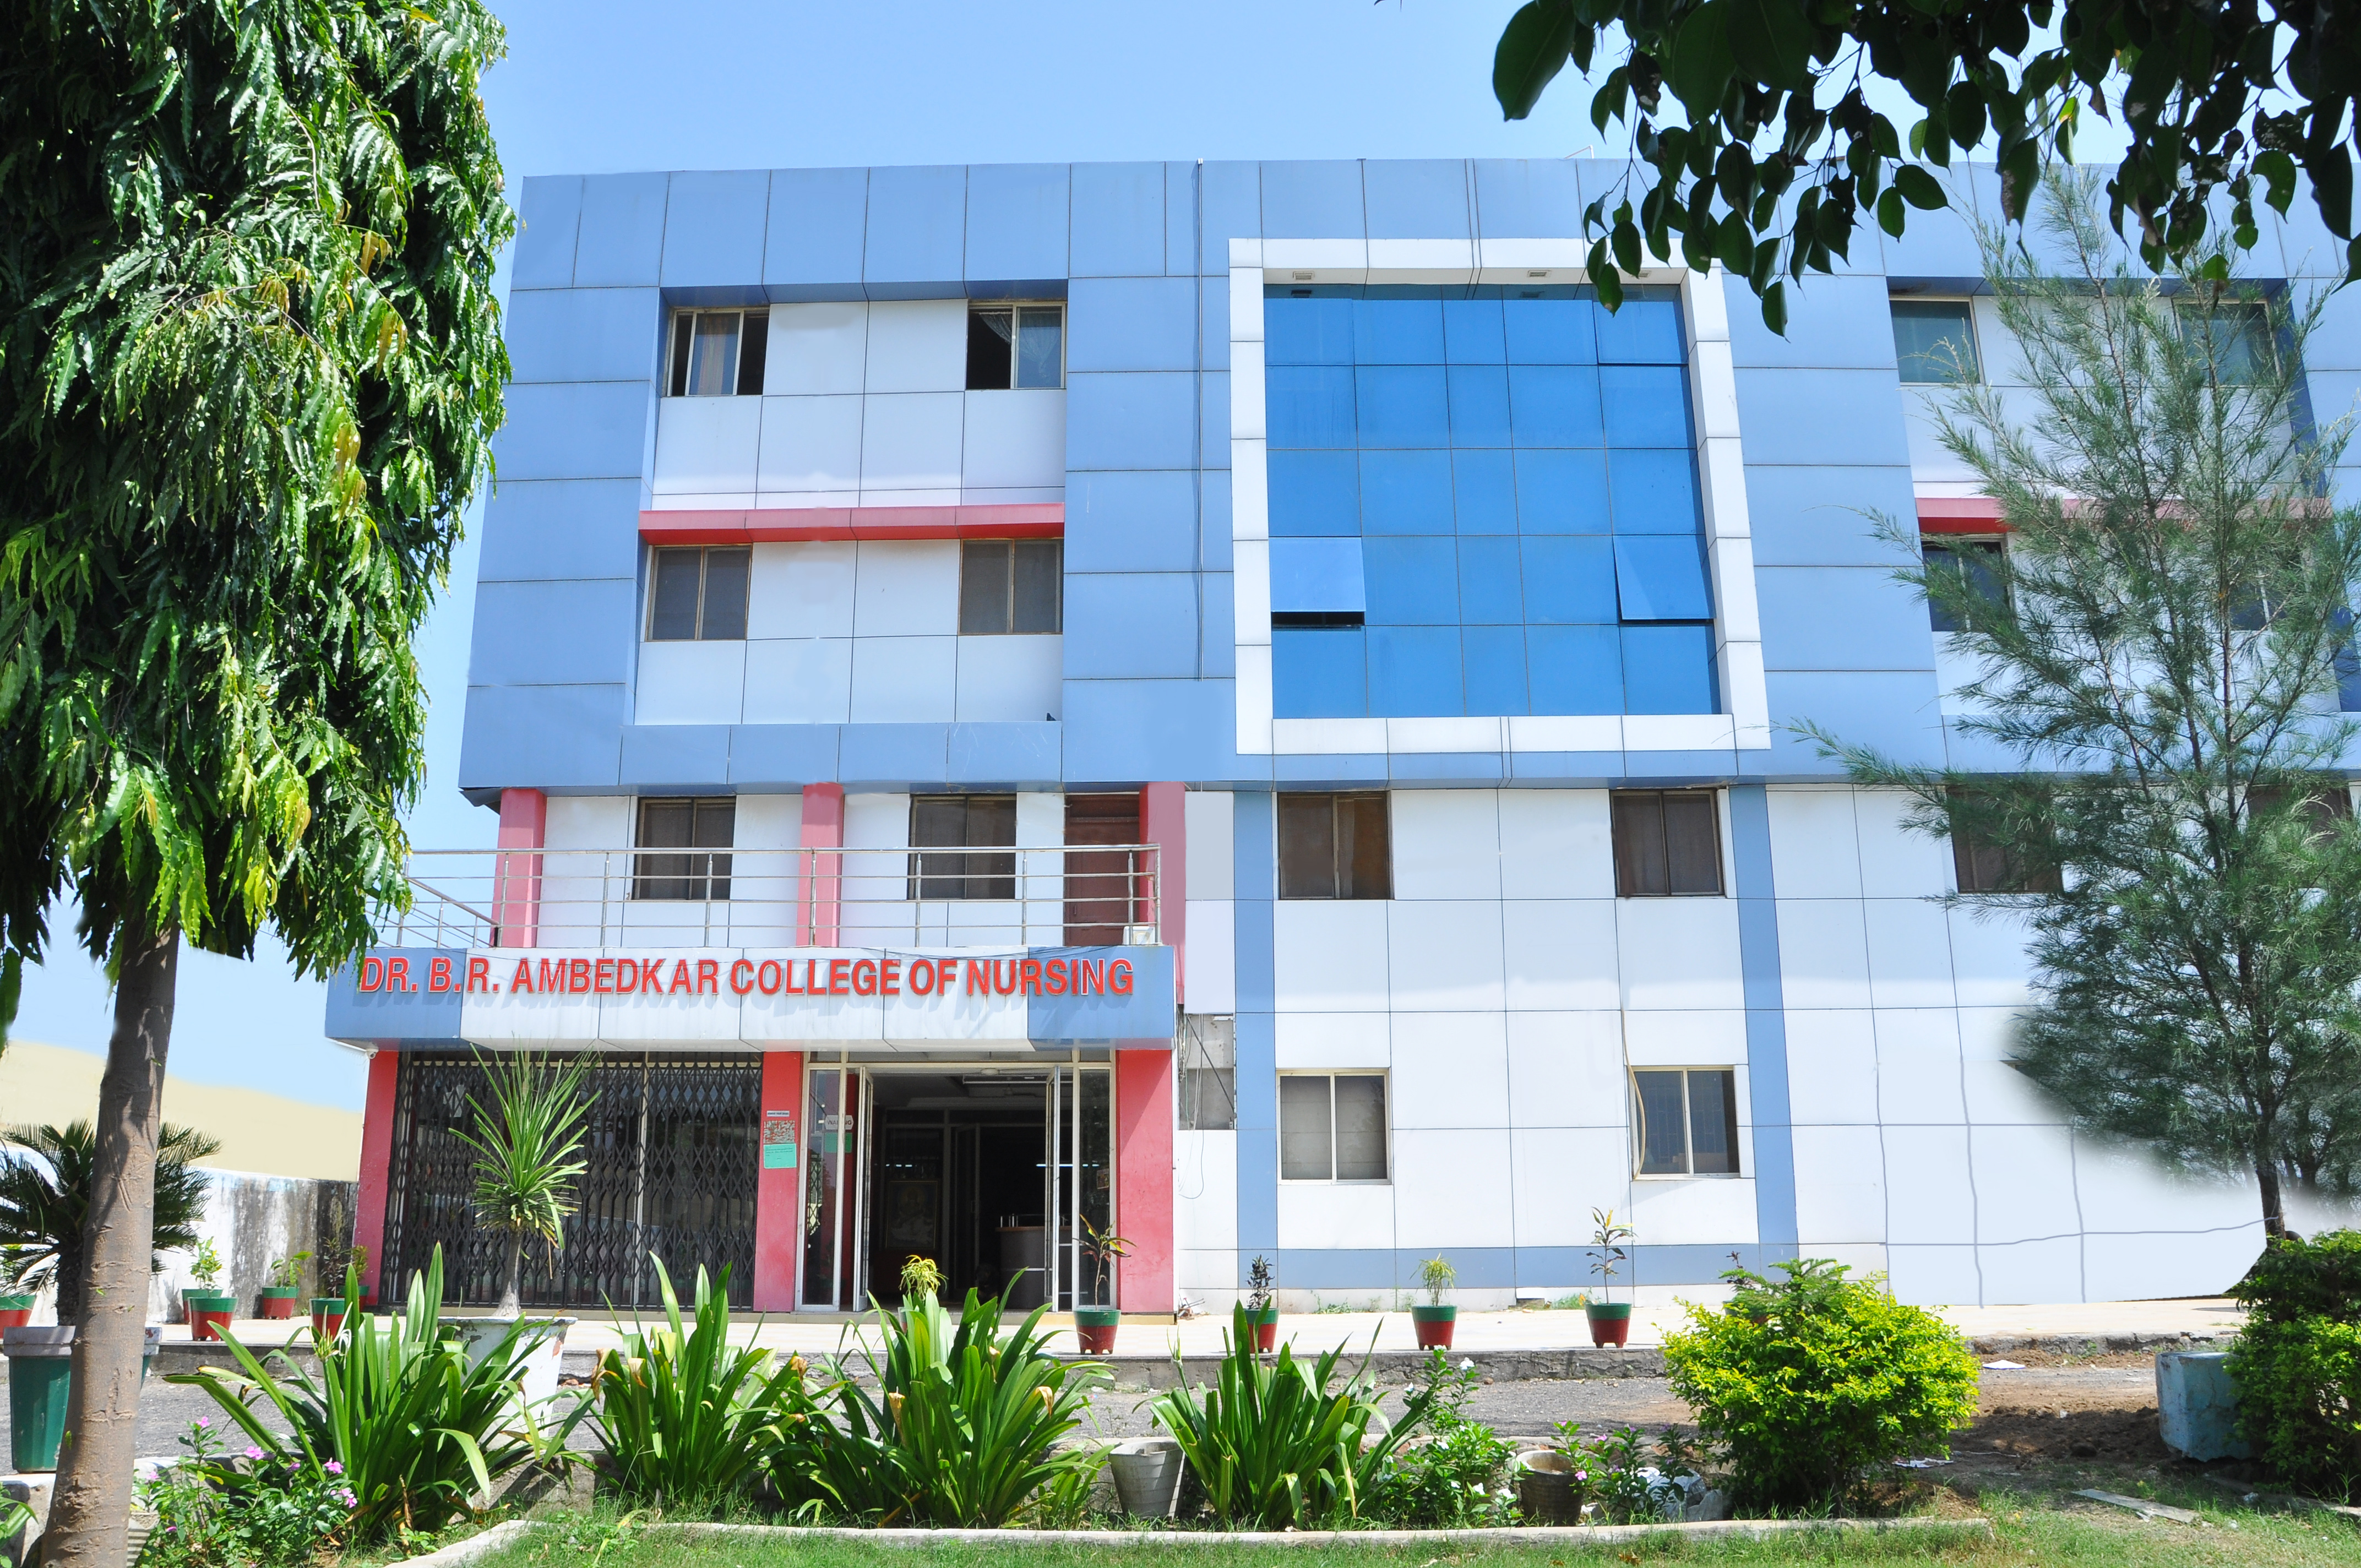 Dr B.R Ambedkar College Of Nursing, Gandhinagar Image